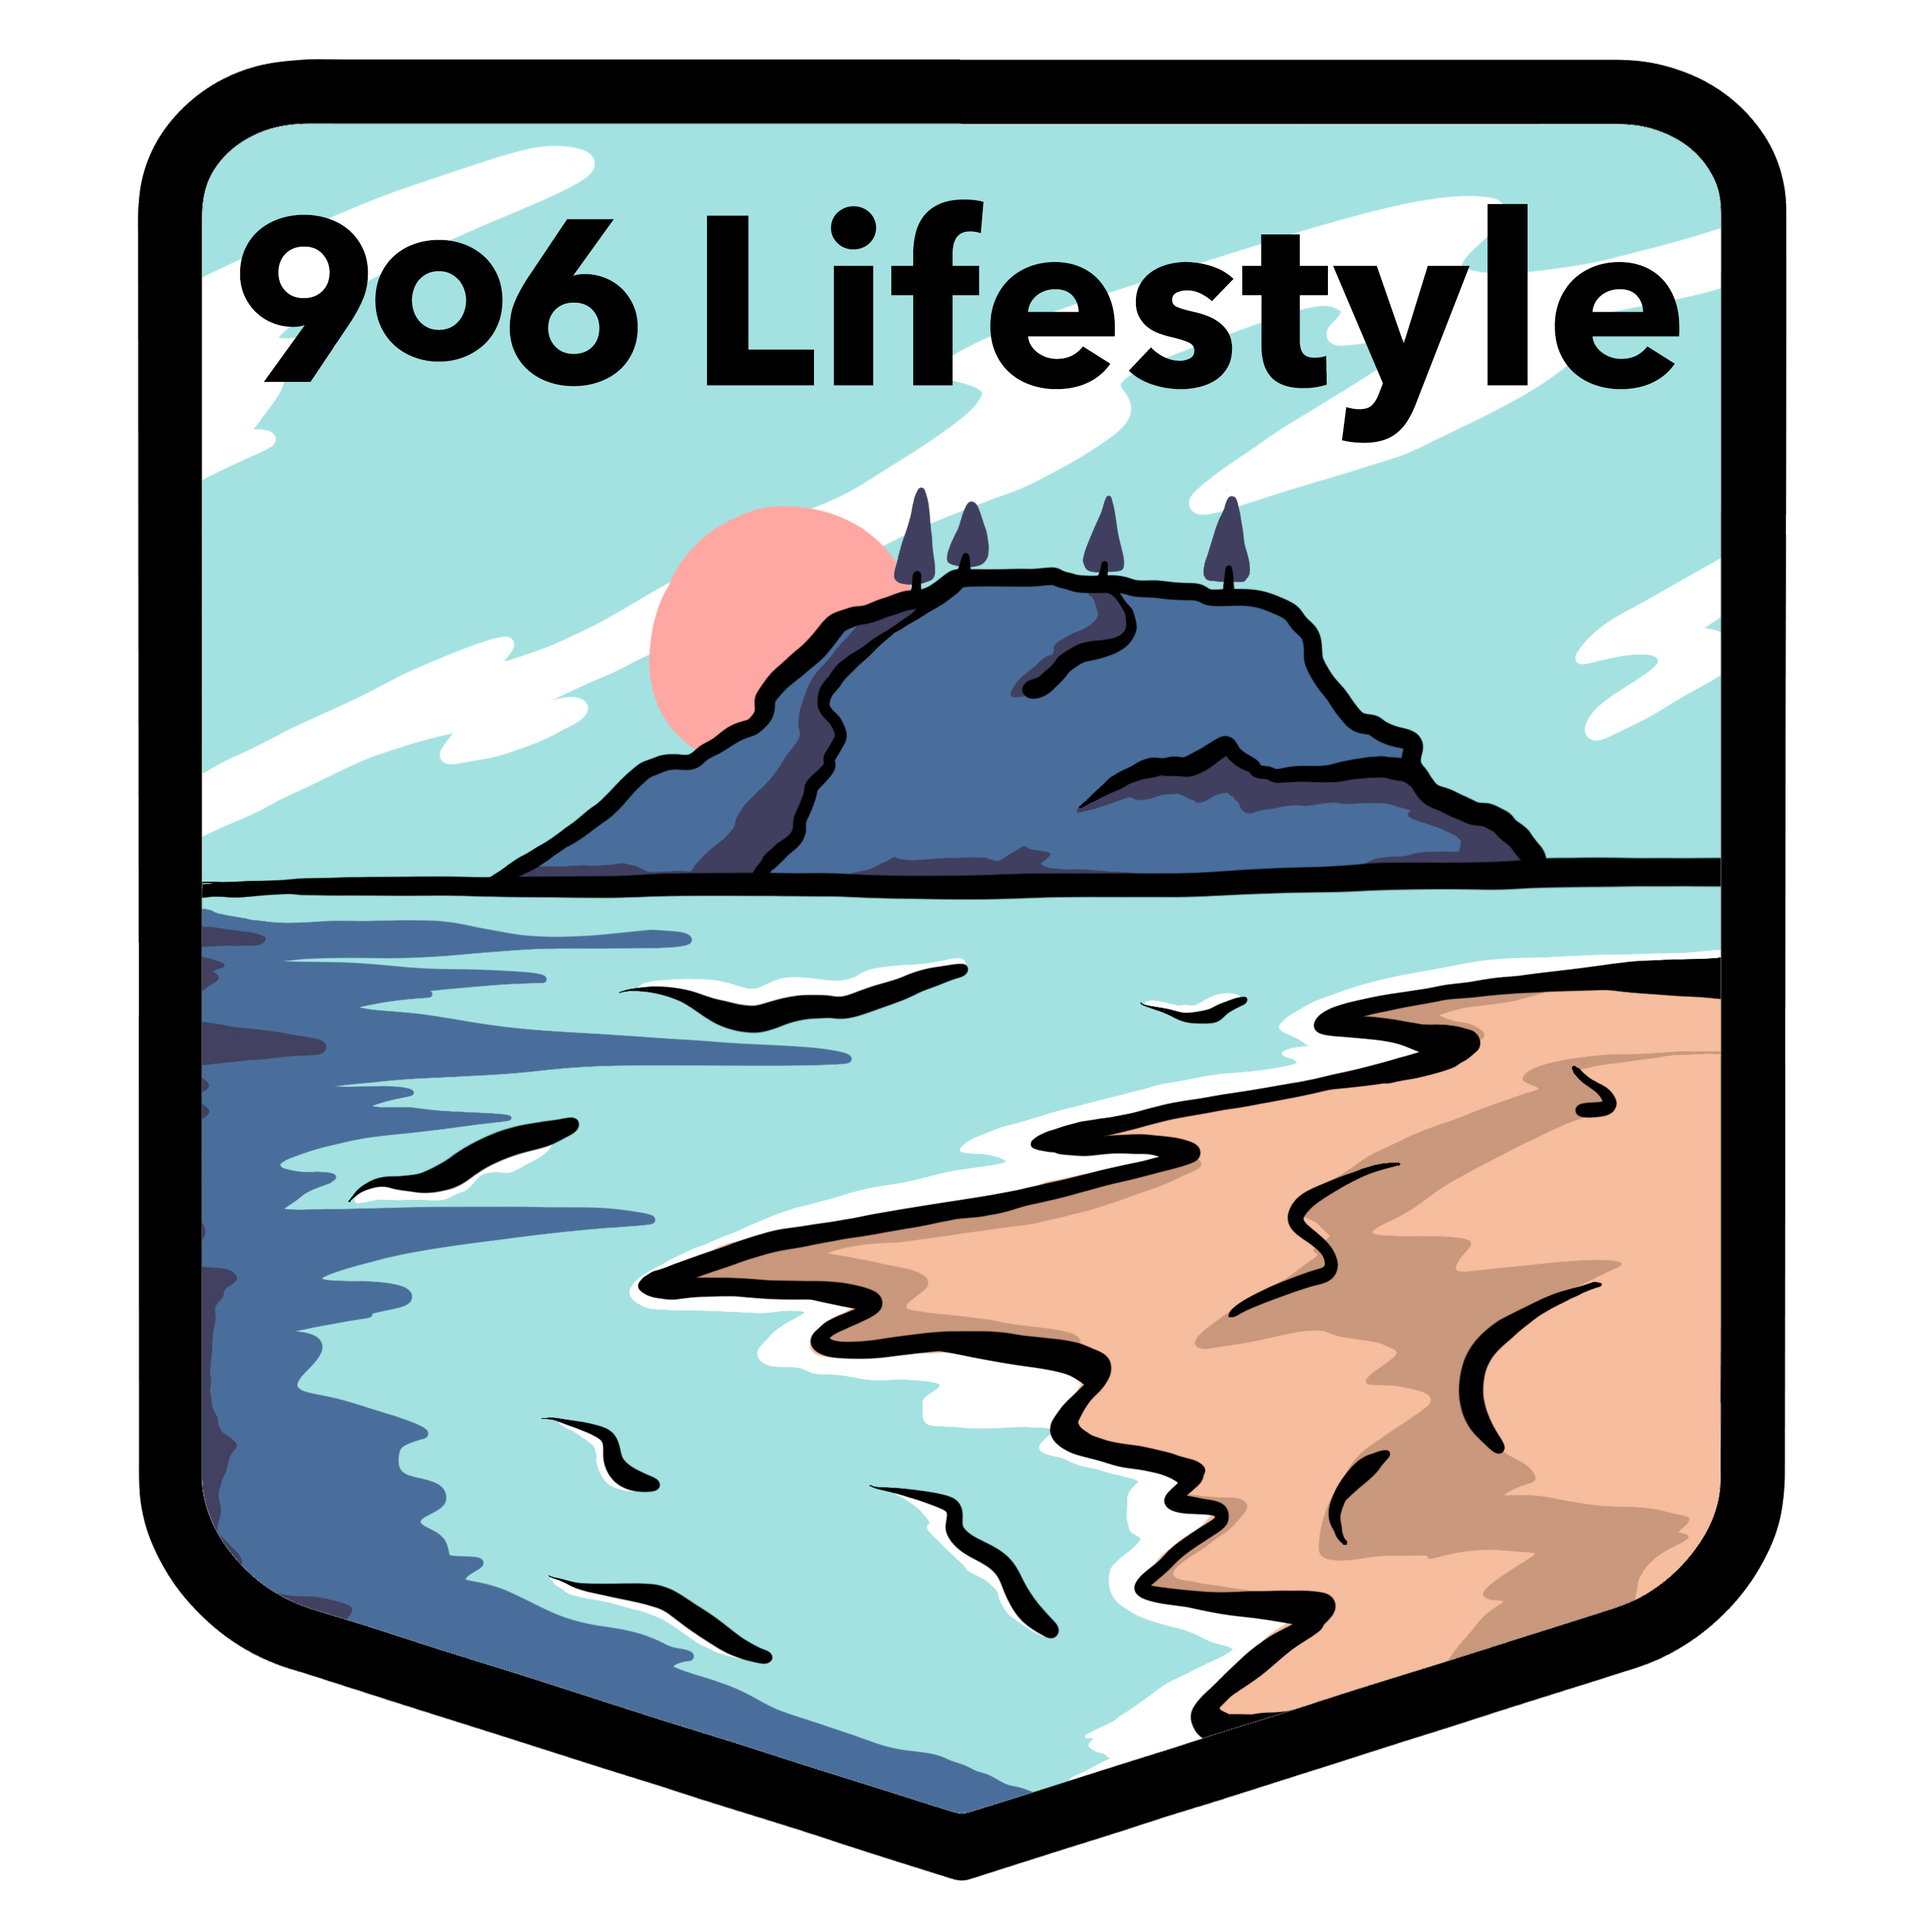 Lifestyle 906 logo